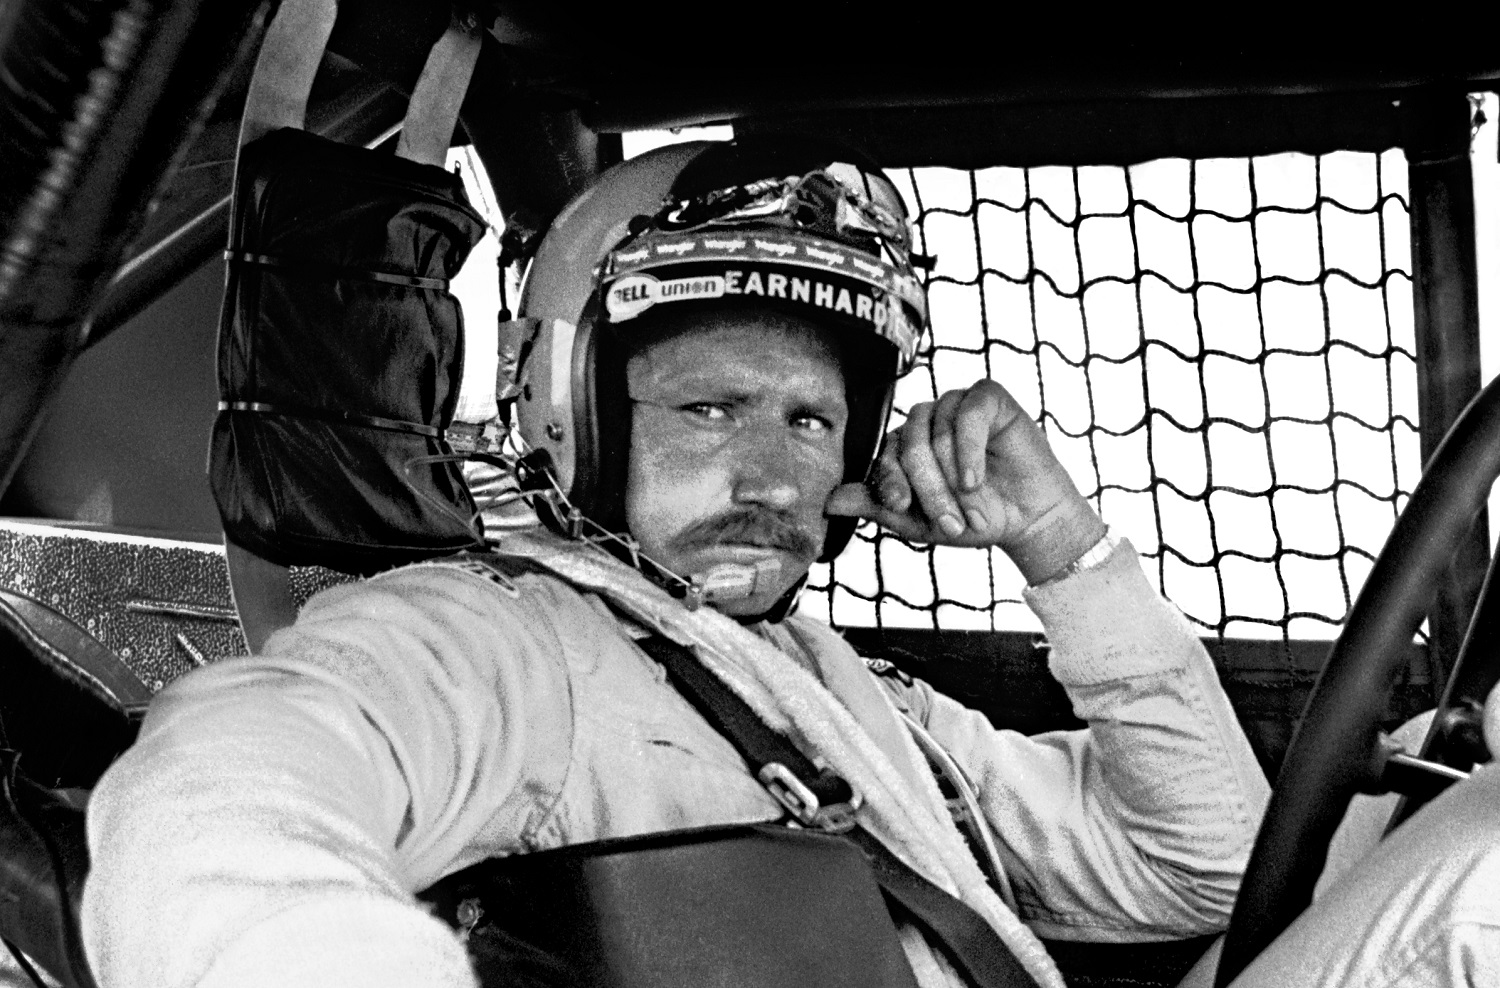 NASCAR driver Dale Earnhardt Sr. sits in his car prior to the 1981 Firecracker 400 NASCAR race at Daytona International Speedway. | Robert Alexander/Getty Images